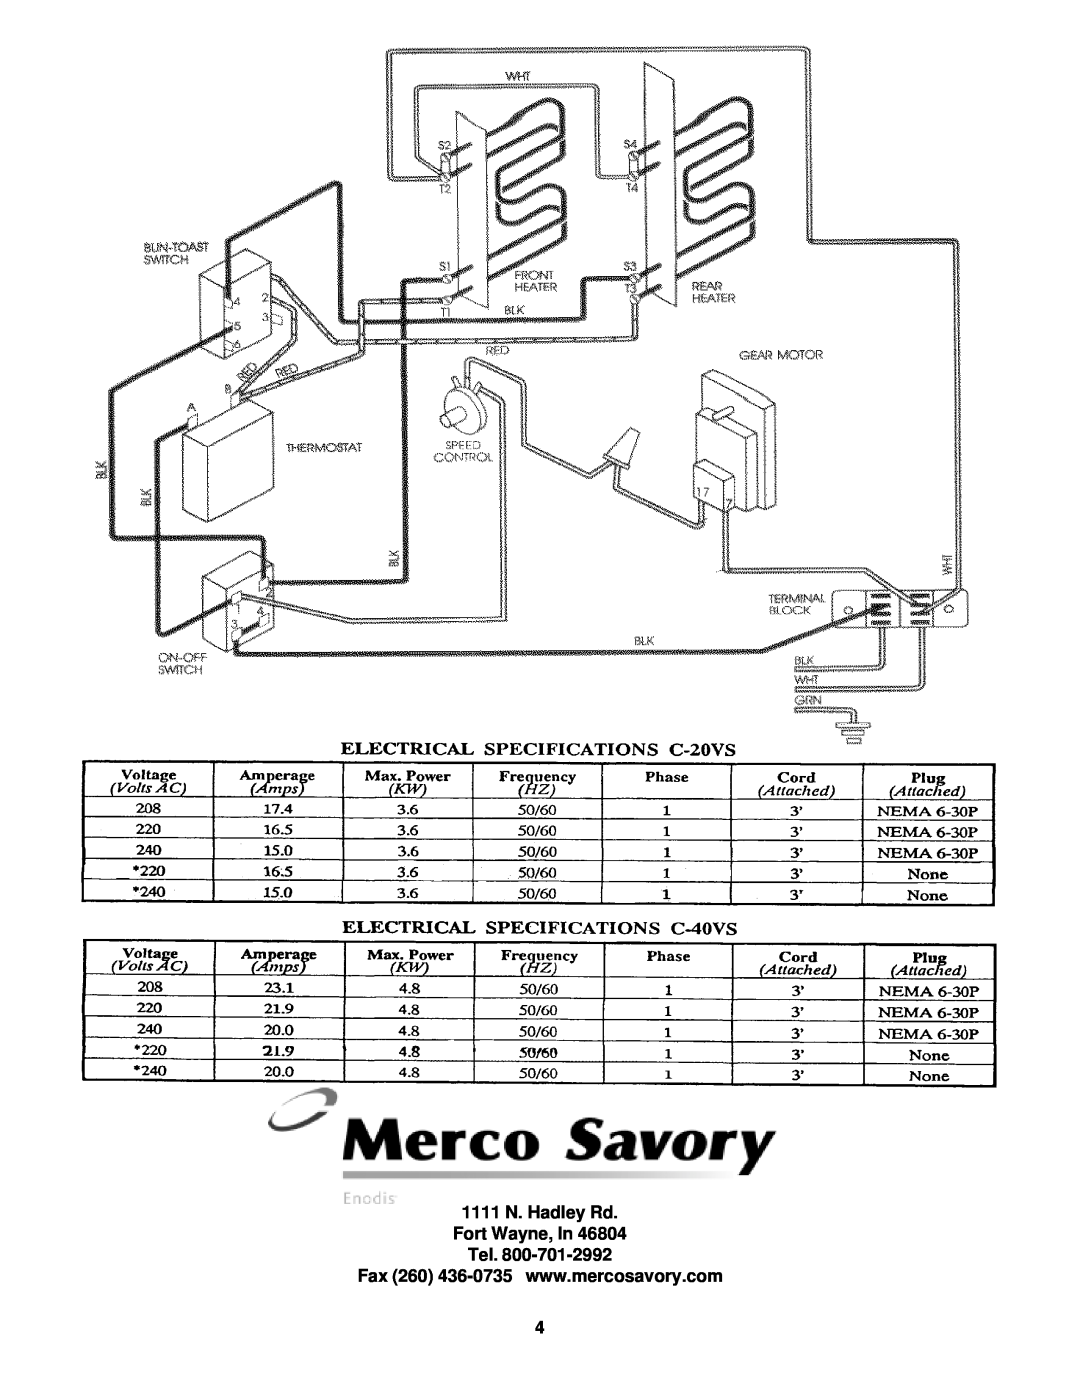 Merco Savory C-40VS, C-20VS operation manual 1111 N. Hadley Rd Fort Wayne, In Tel 